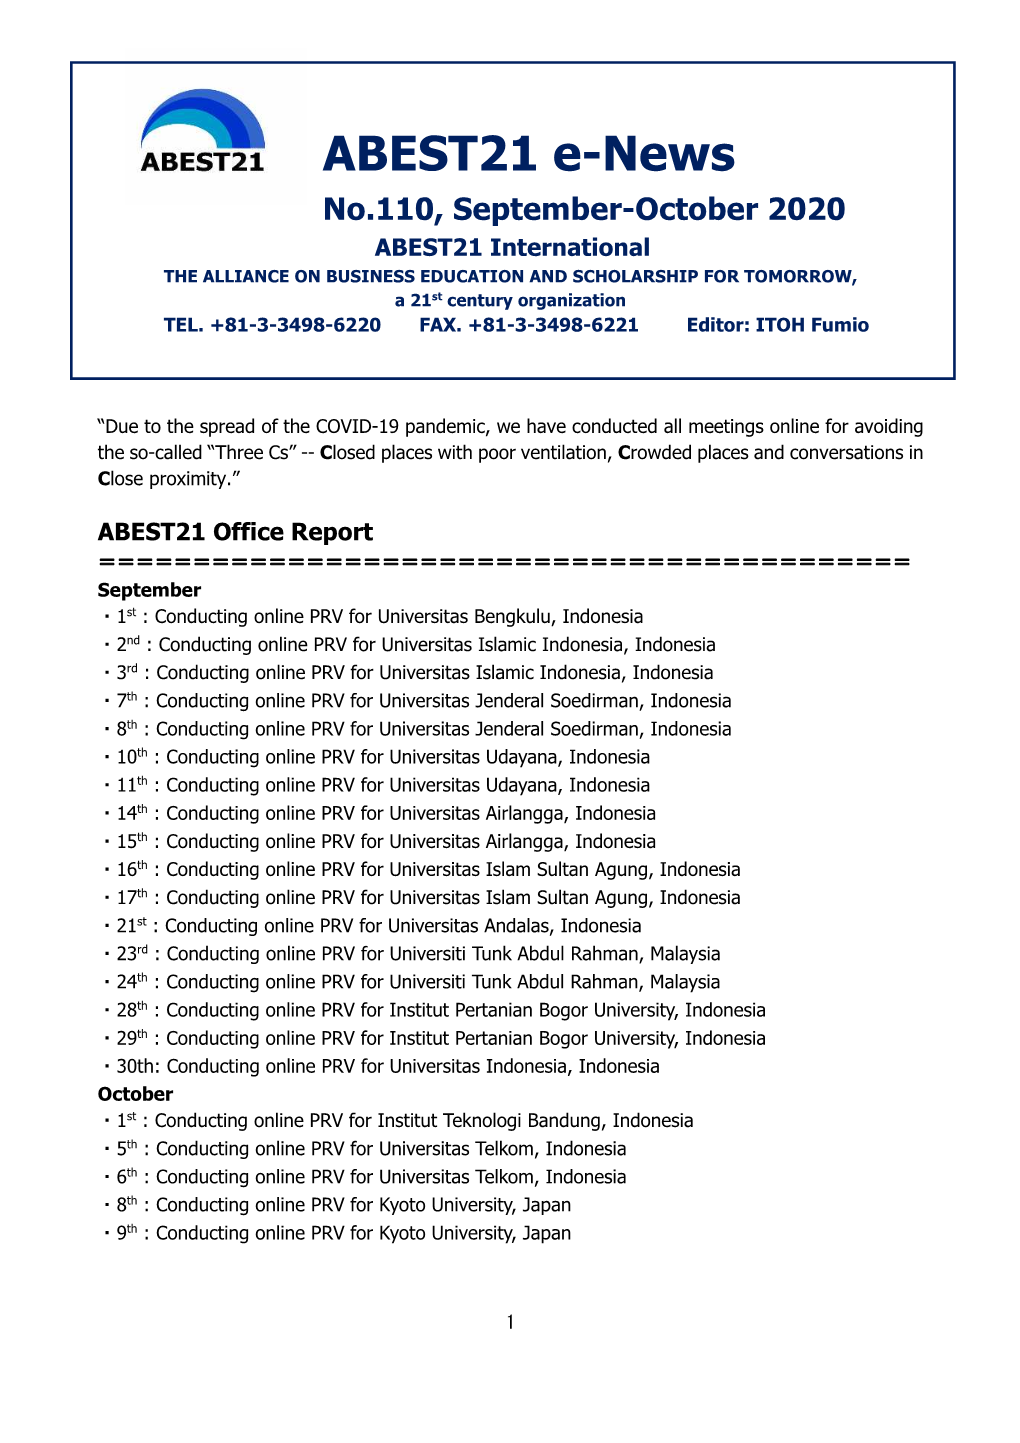 ABEST21 Enews No.110, September-October 2020